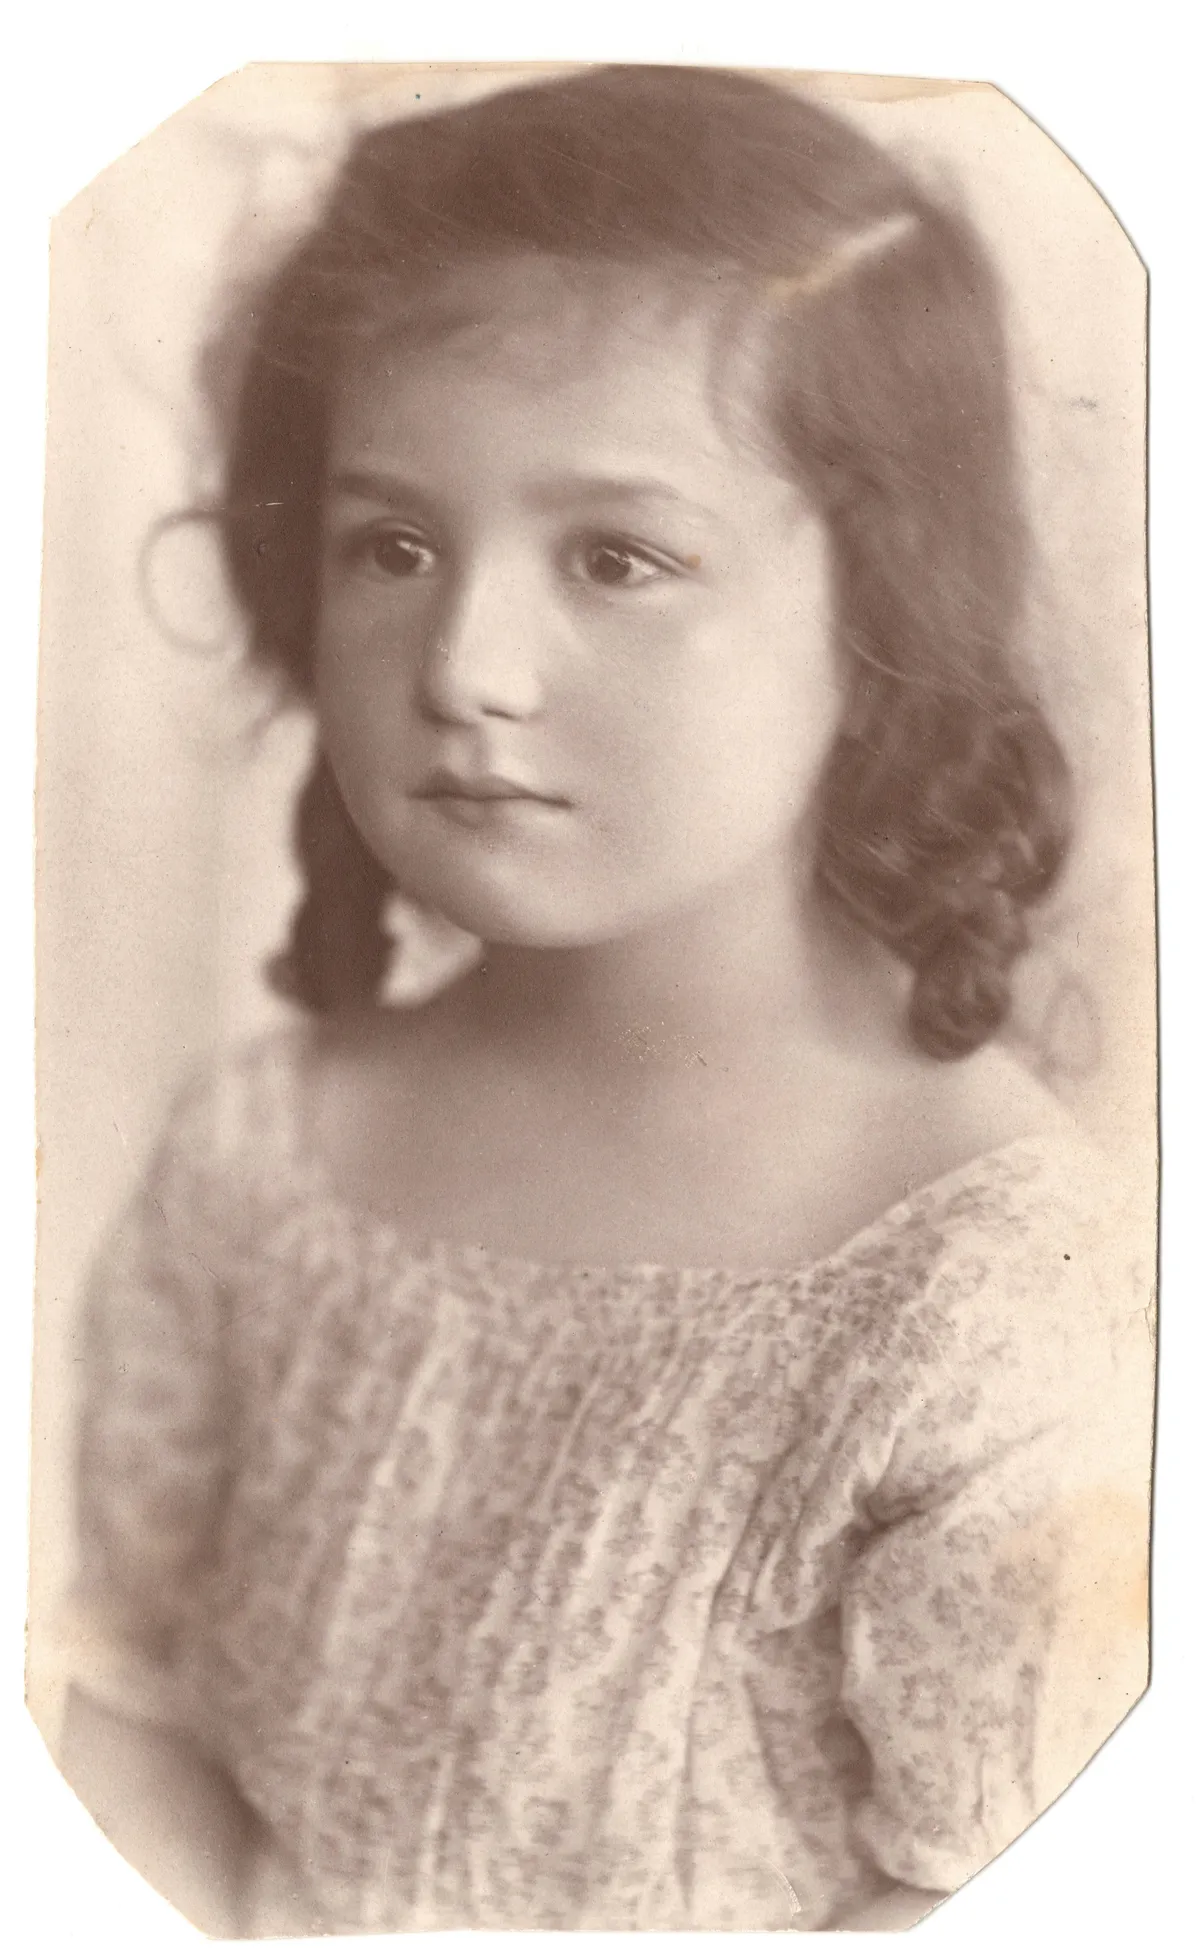 Matt Lucas's grandmother Rose in 1917